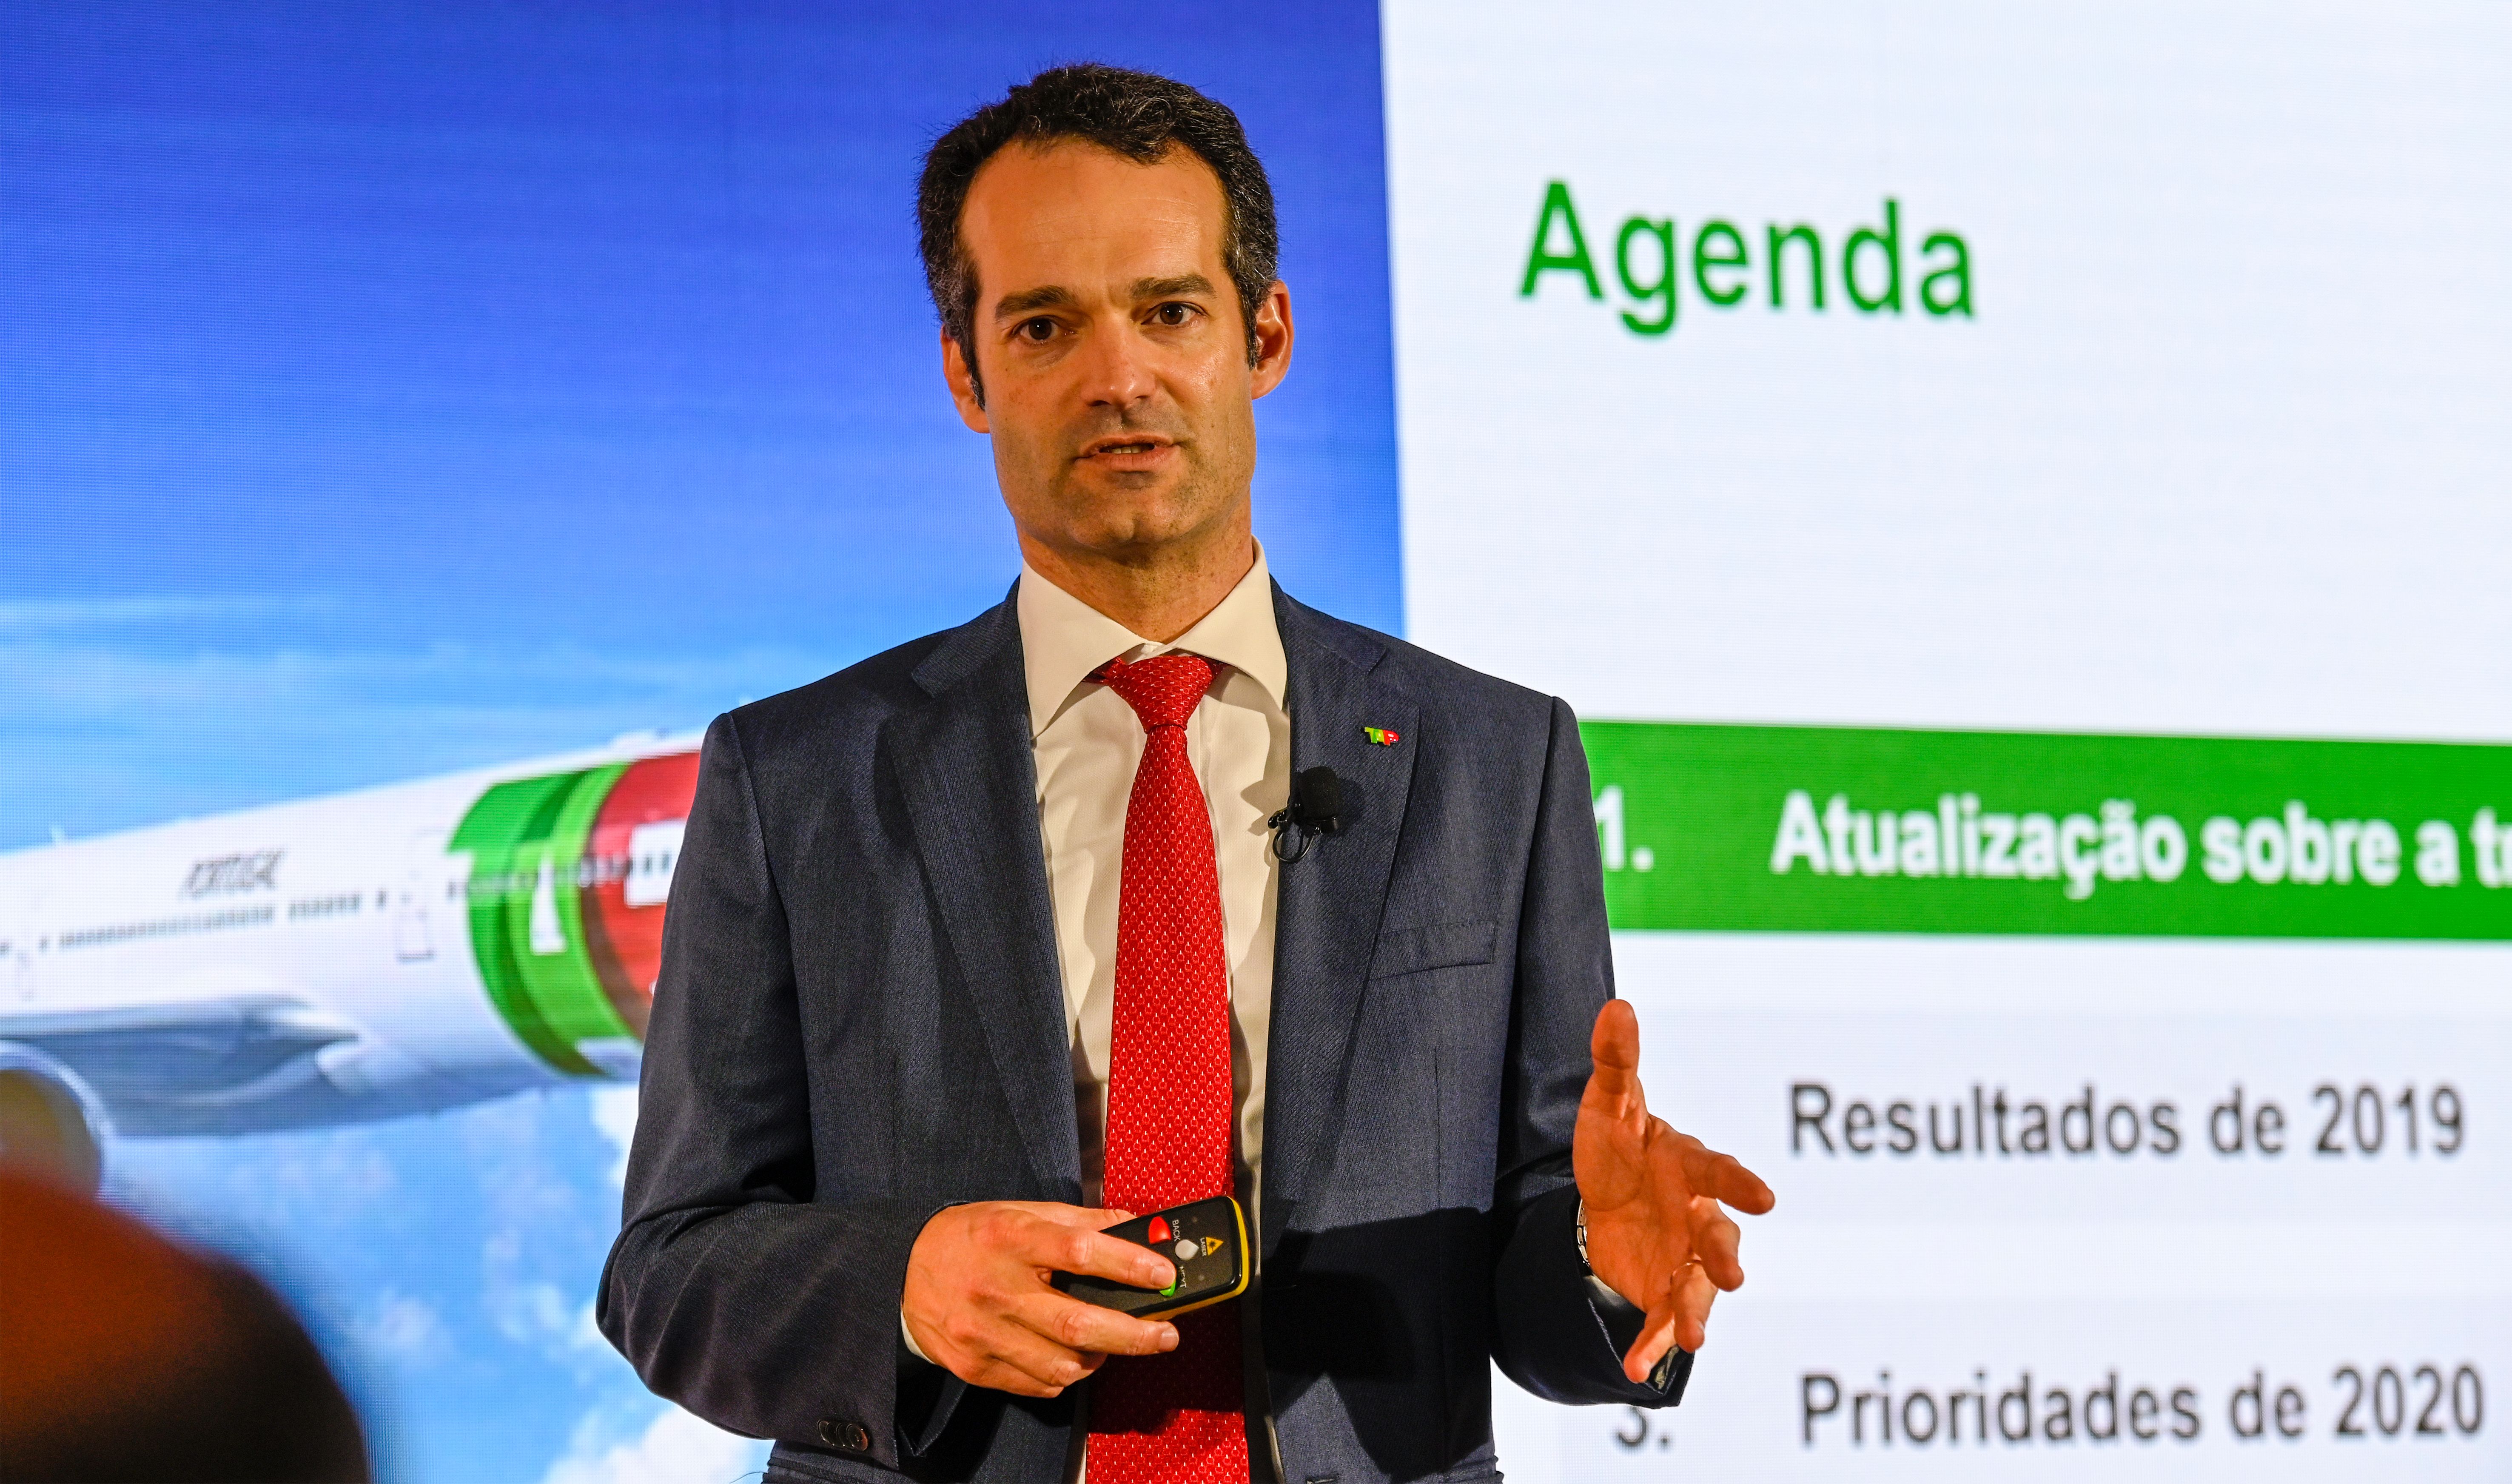 Ex-CEO of TAP Air Portugal, Antonoaldo Neves